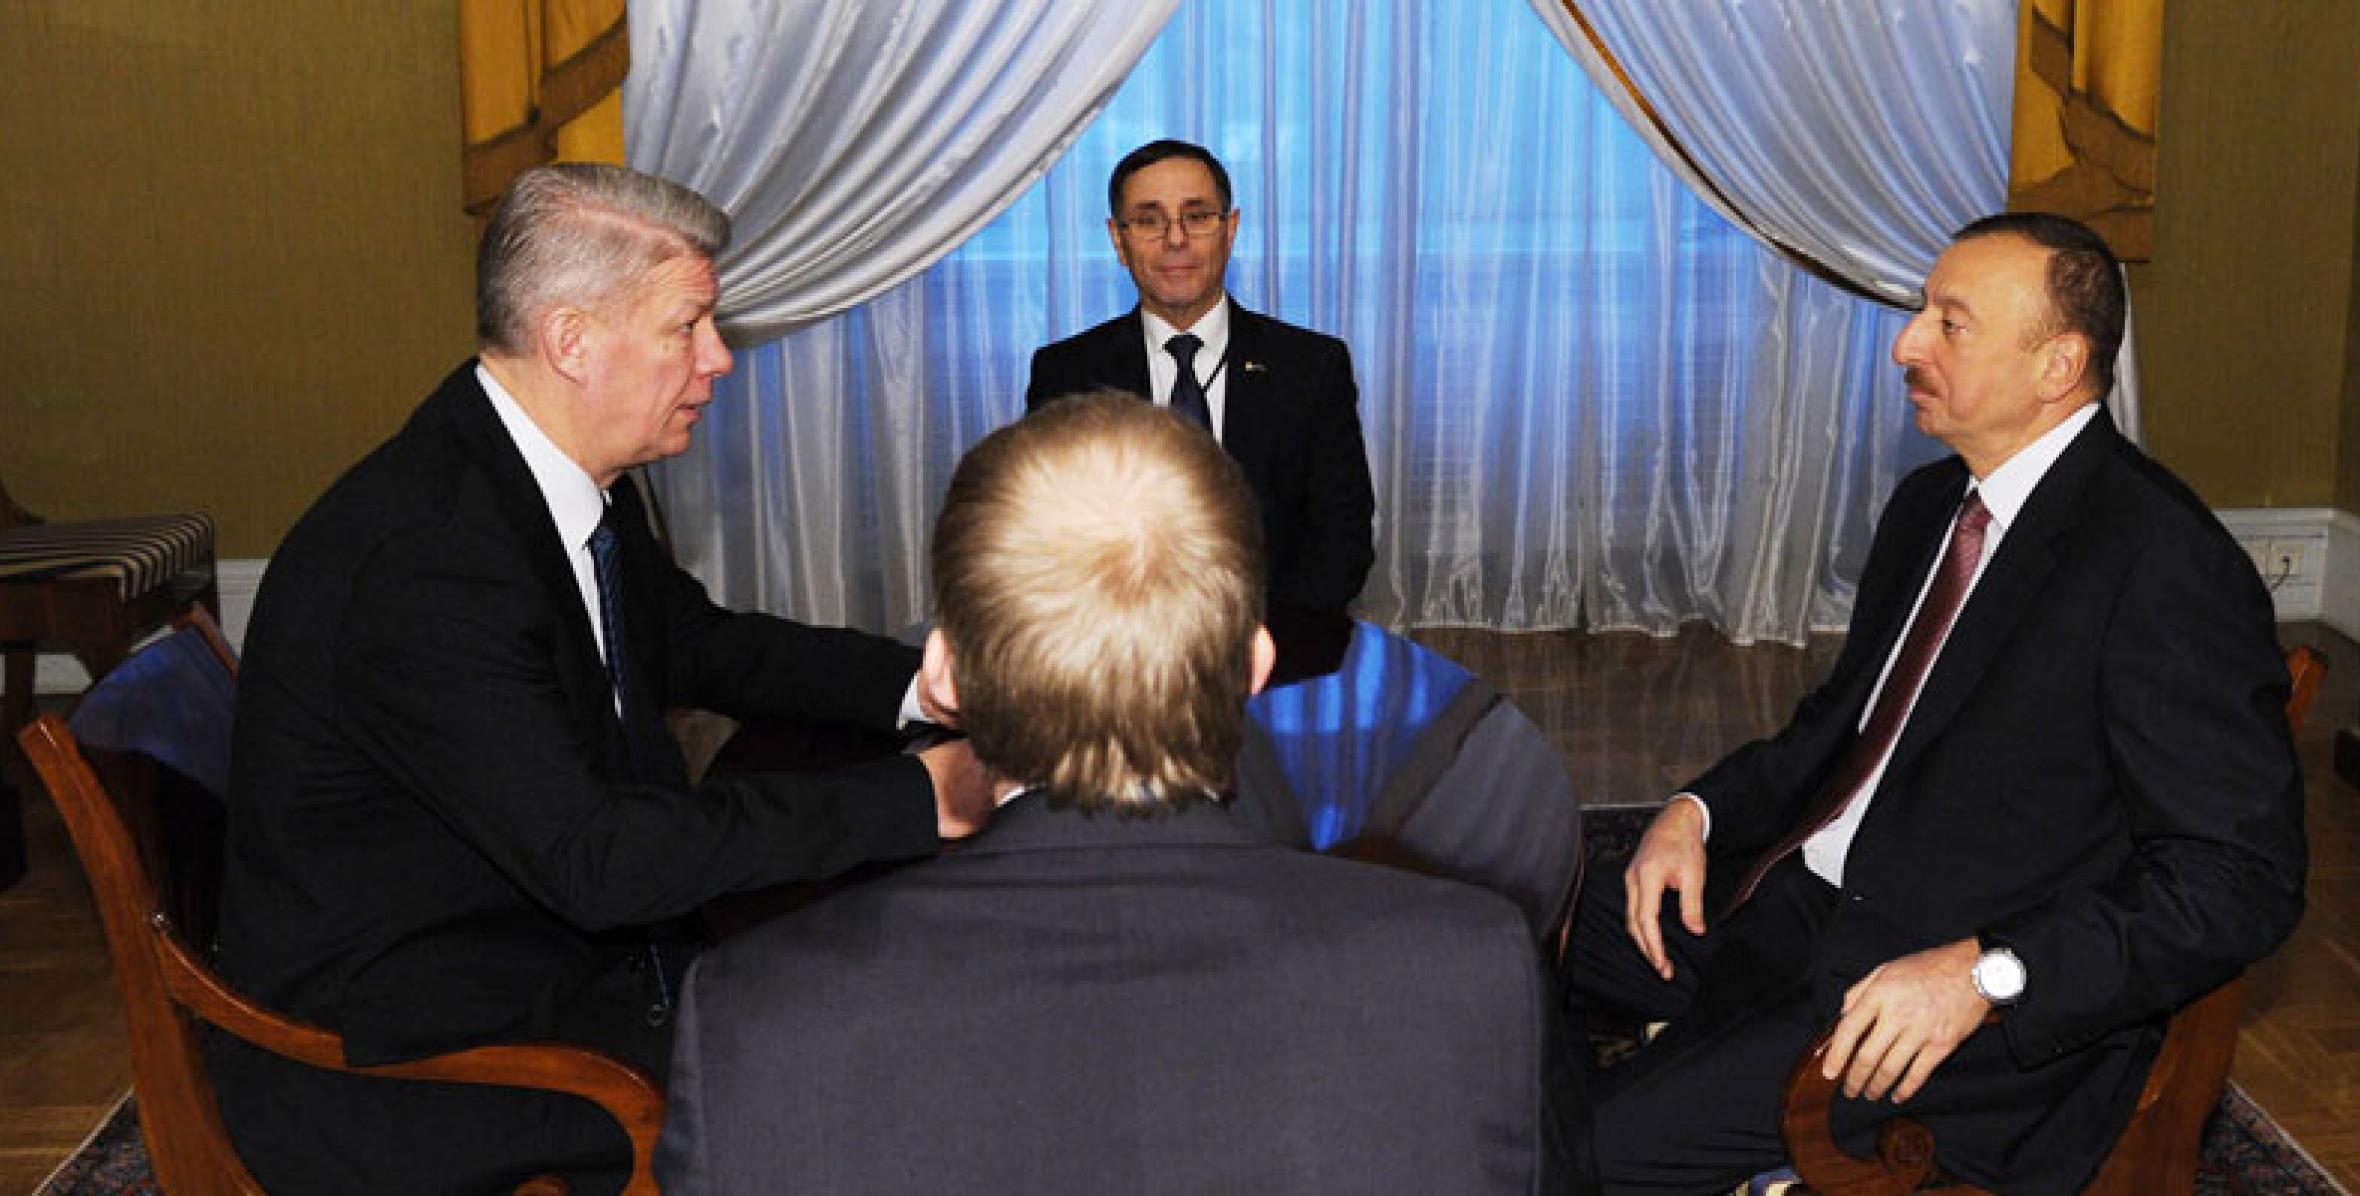 Ilham Aliyev held a one-on-one meeting with Latvian President Valdis Zatlers